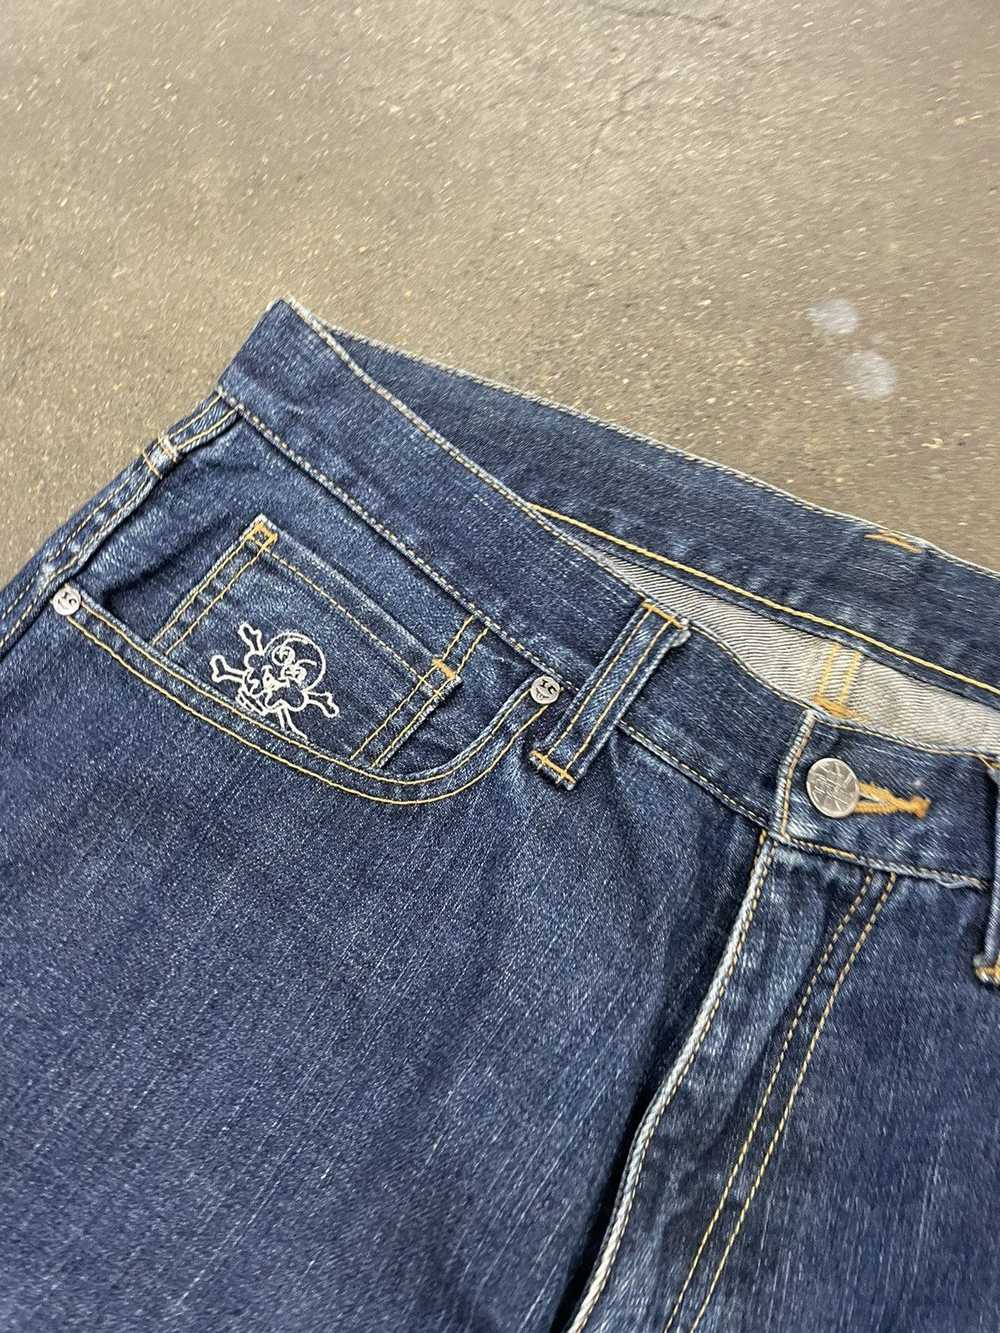 Japanese Brand Icecream Denim Jeans - image 5